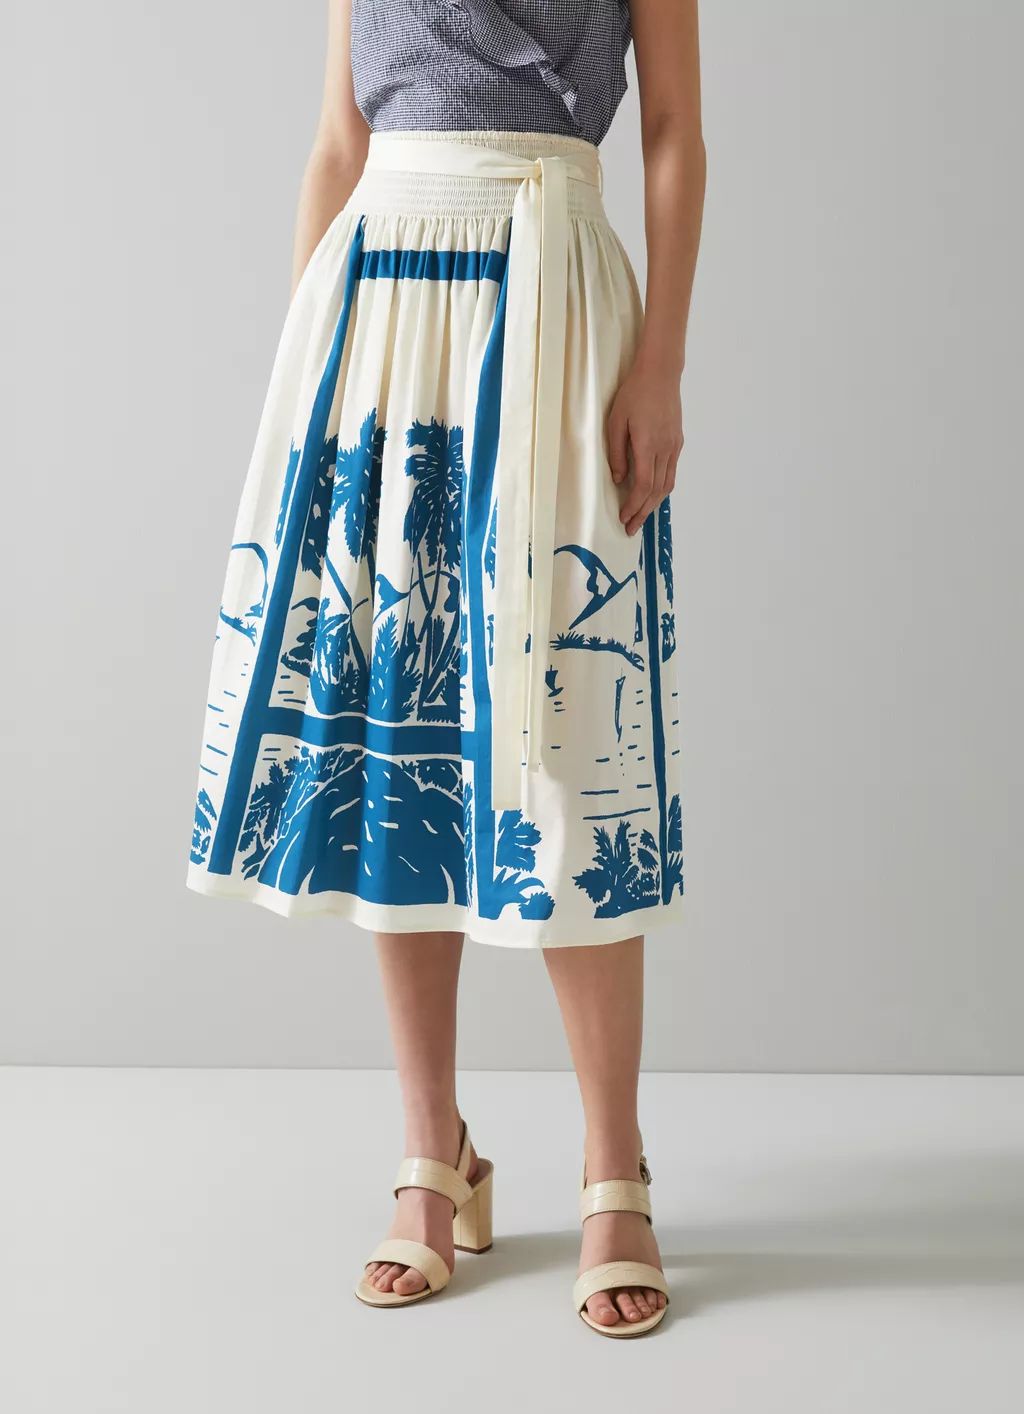 Fellini Blue and Cream Tropical Print Cotton Skirt | Skirts | Clothing | Collections | L.K.Bennet... | L.K. Bennett (UK)